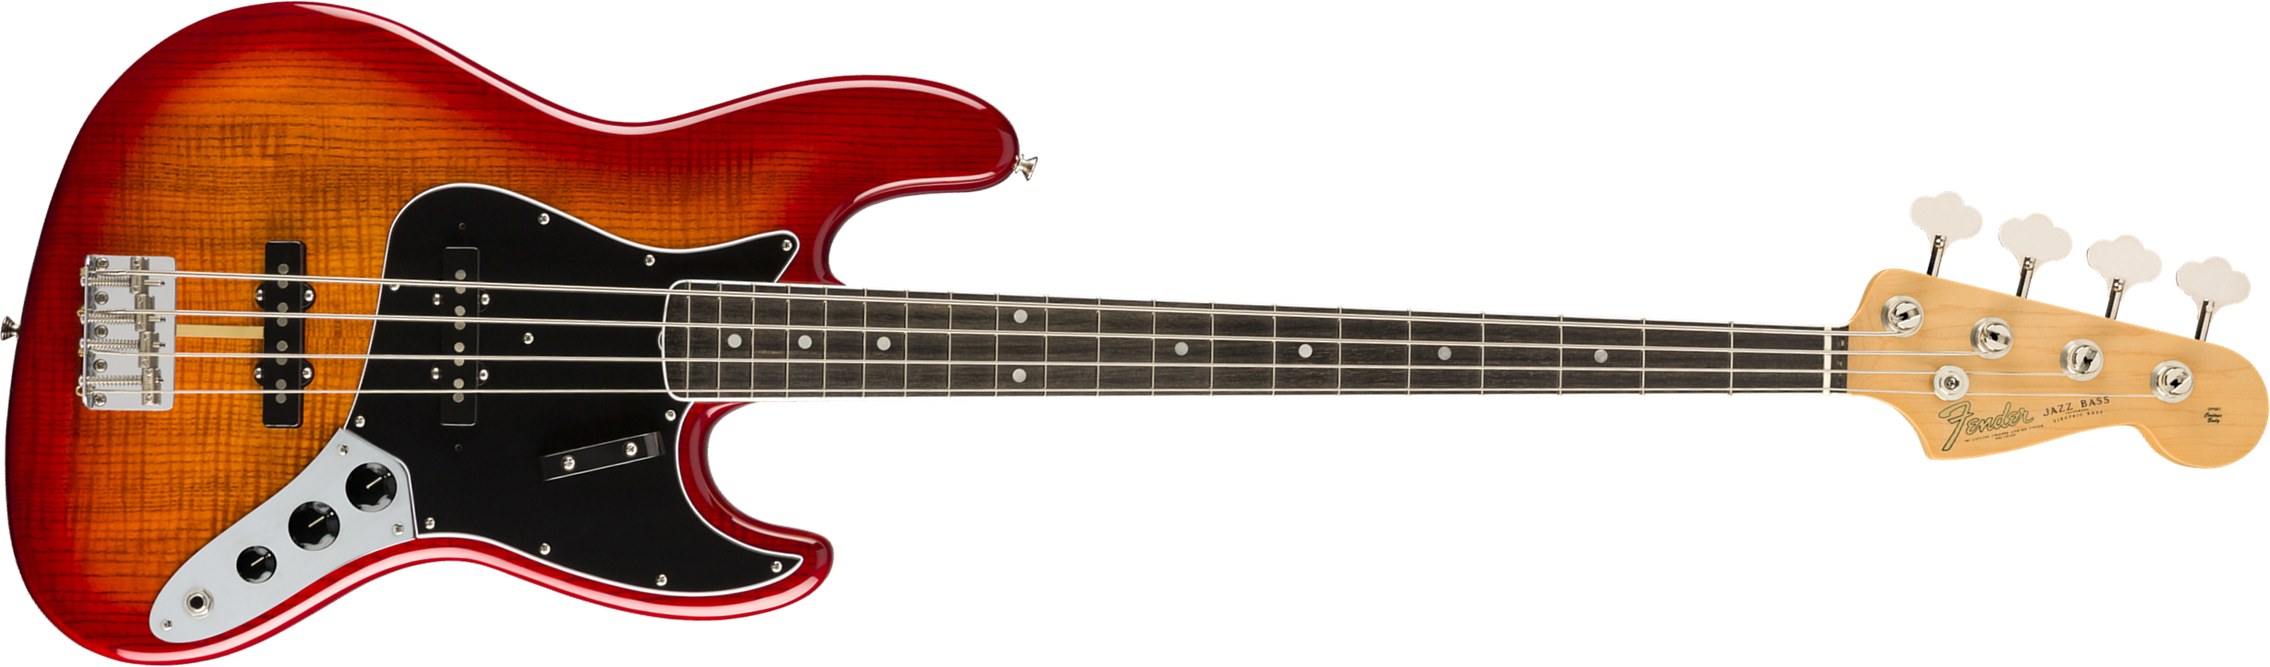 Fender Jazz Bass Flame Ash Top Rarities Usa Eb - Plasma Red Burst - Bajo eléctrico de cuerpo sólido - Main picture